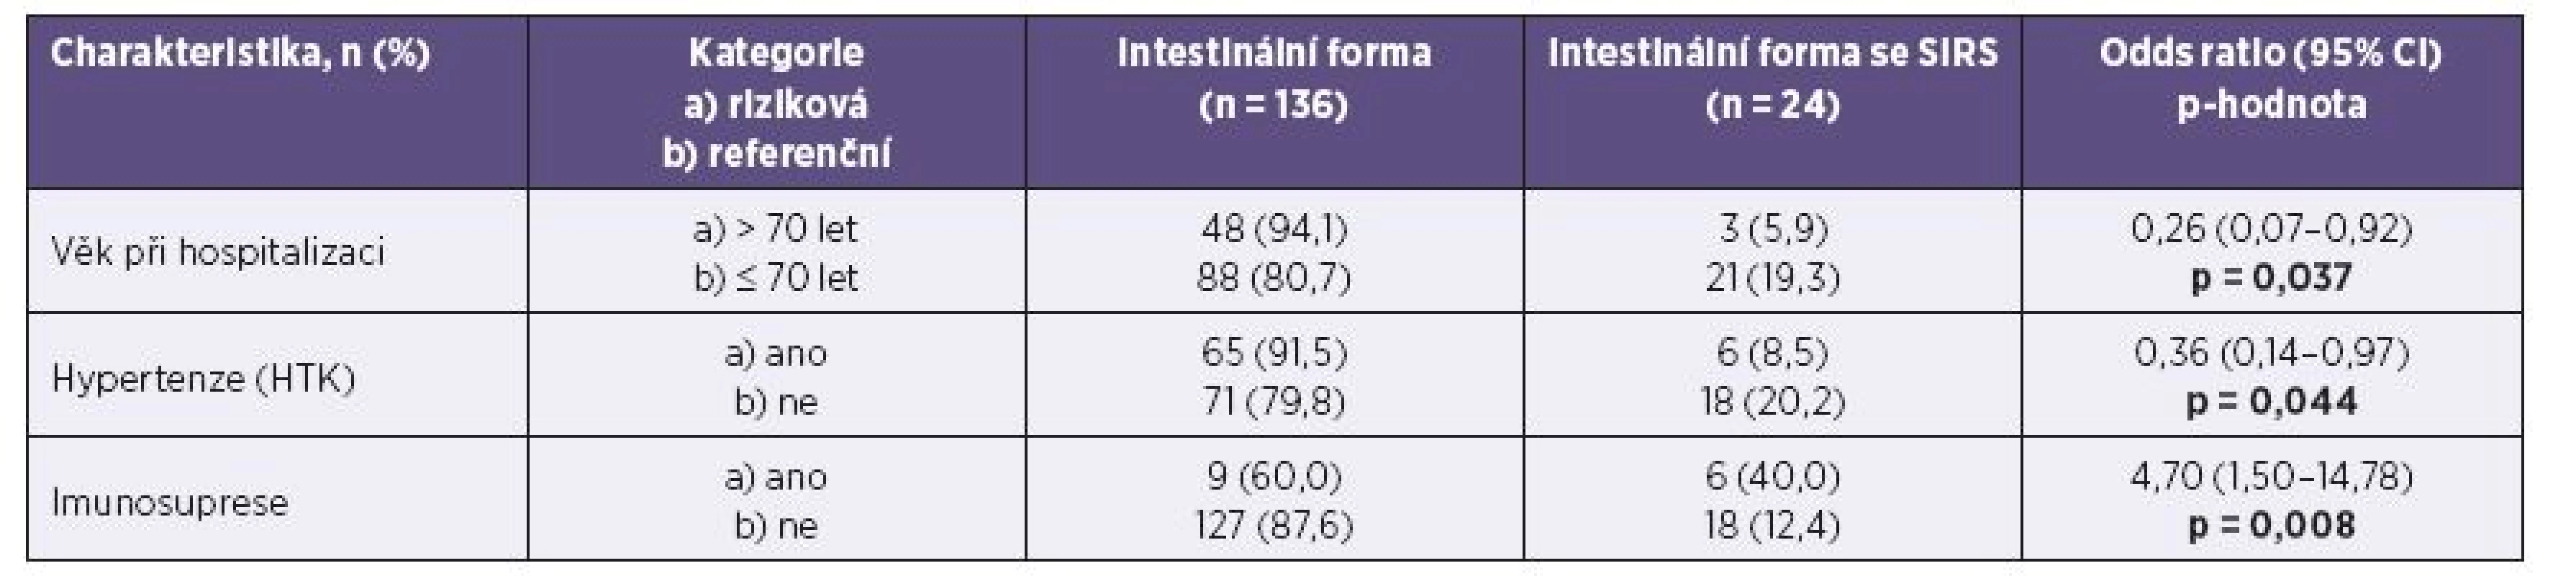 Potenciální prediktory výskytu SIRS dle anamnézy
Table 3. Potential predictors of SIRS depending on patient medical history